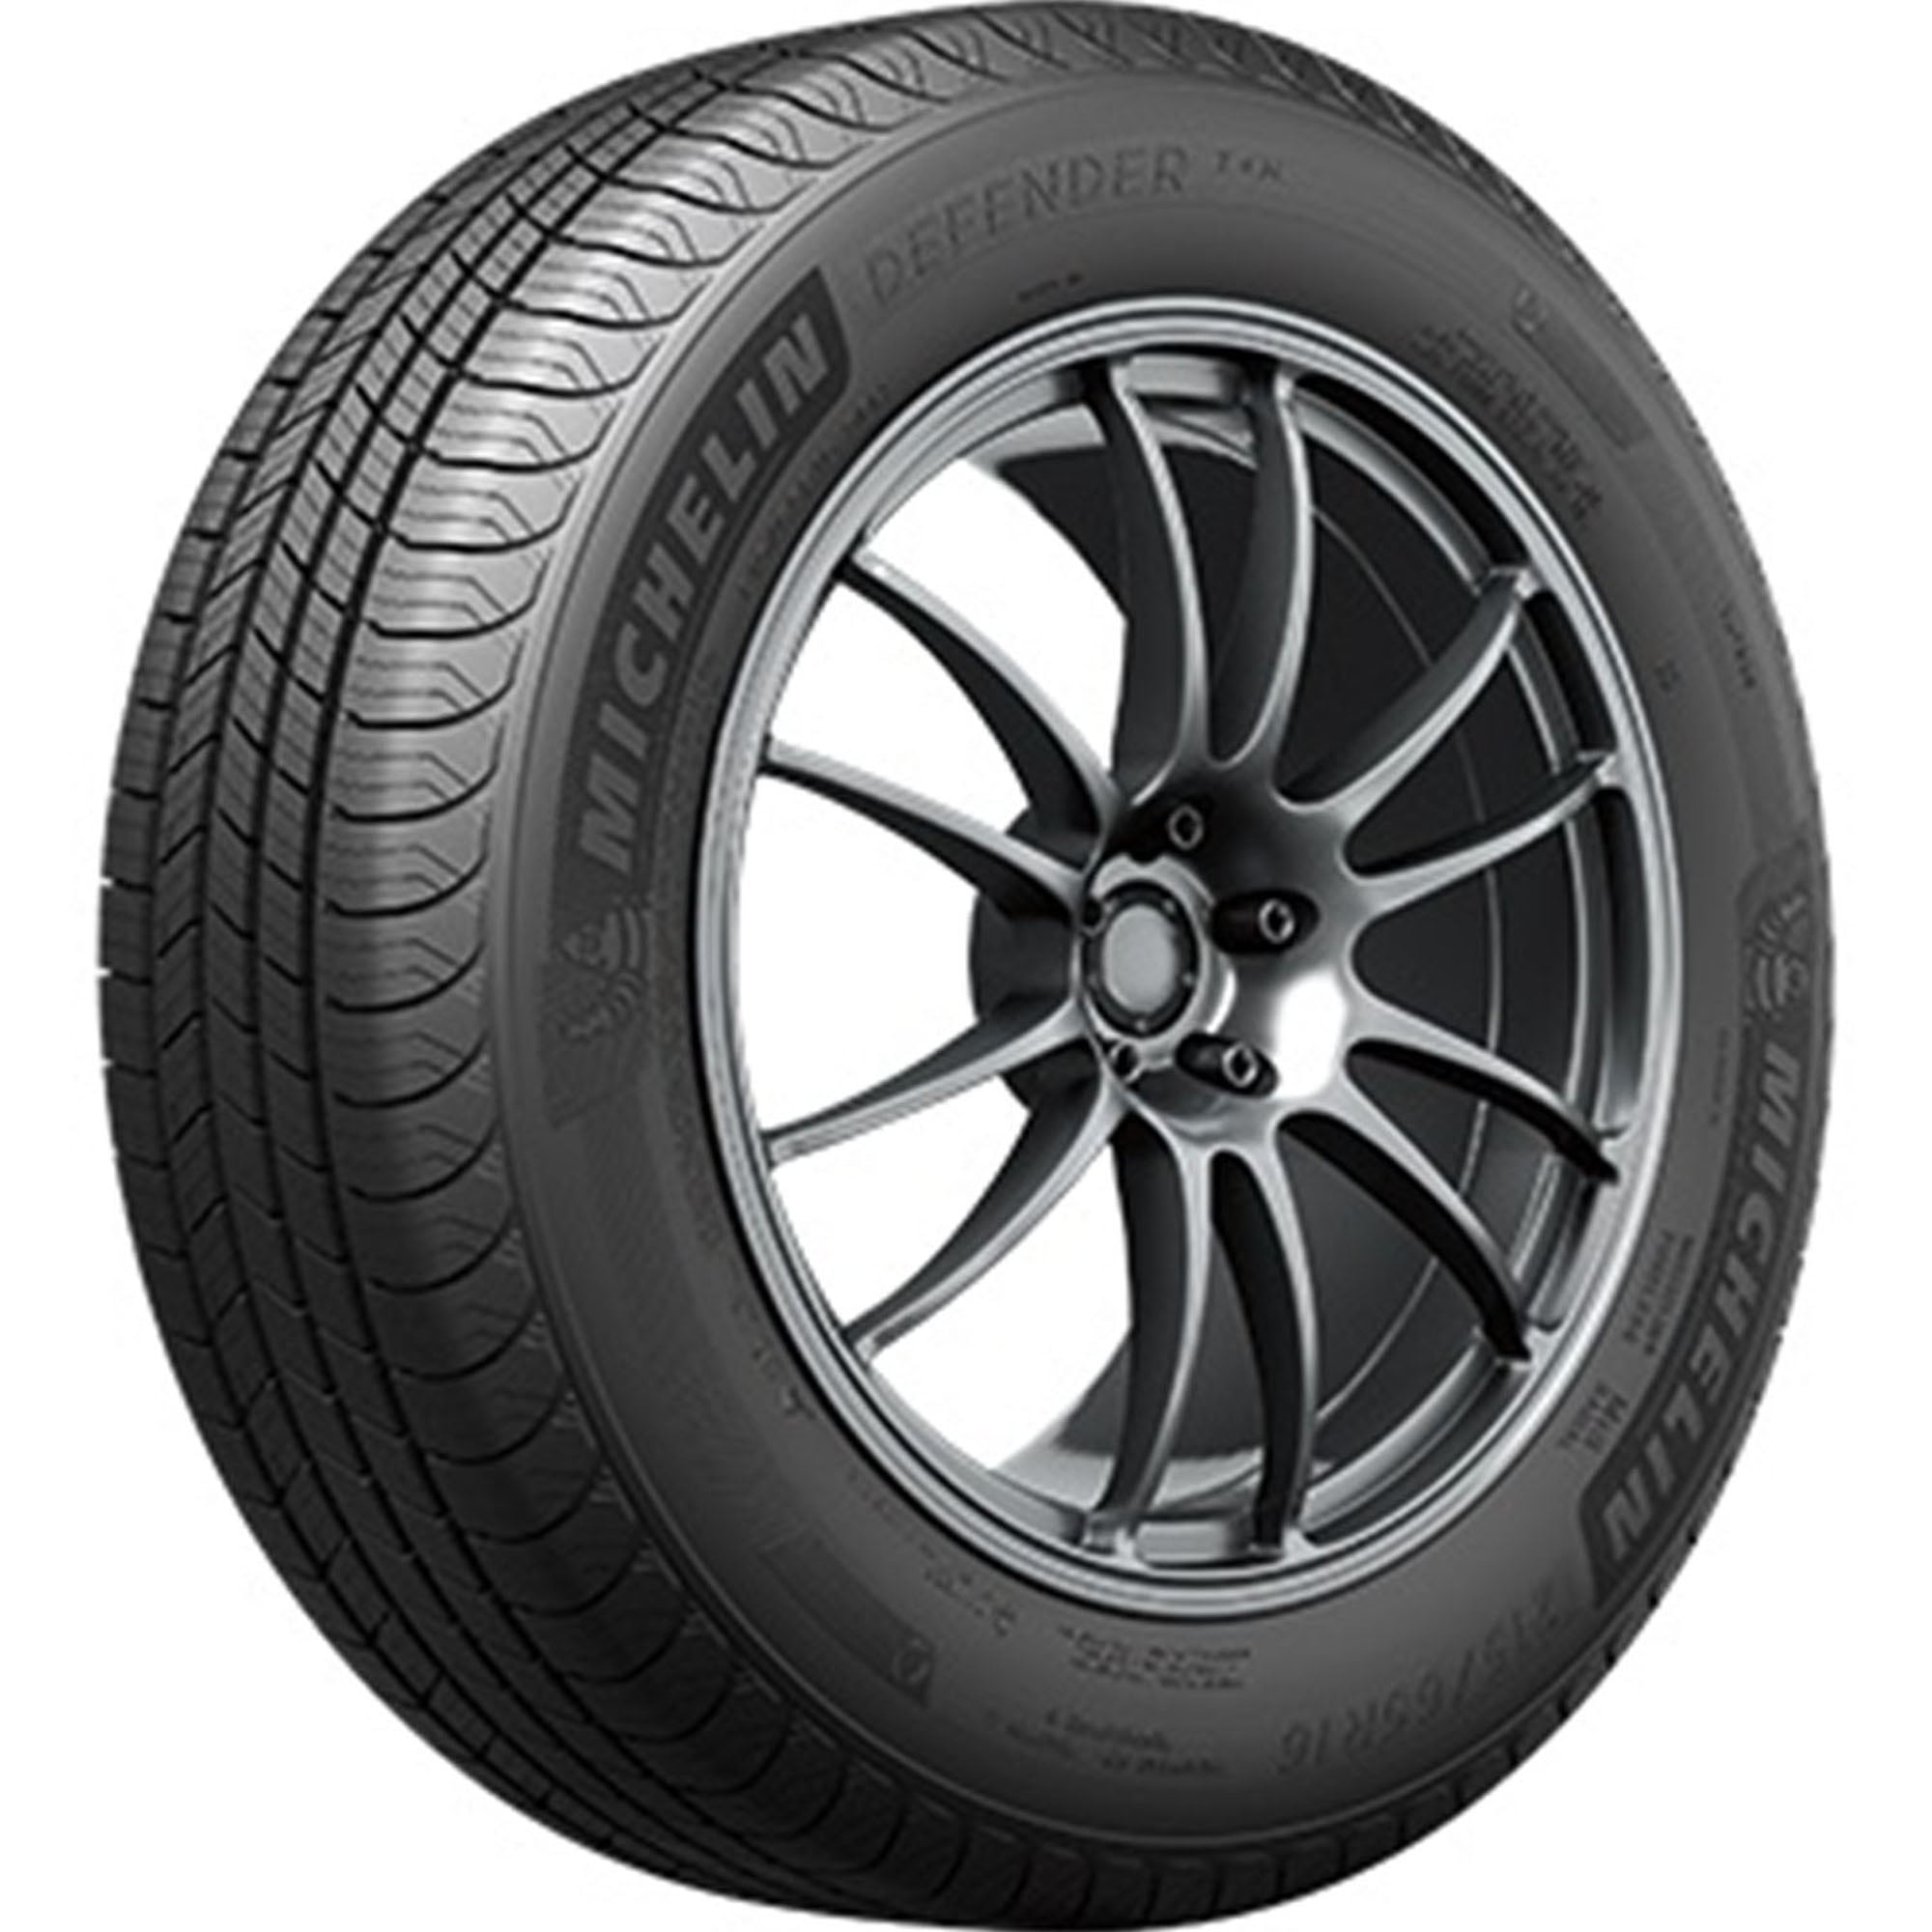 Michelin Defender T+H All Season 195/65R15 91H Passenger Tire - image 1 of 4